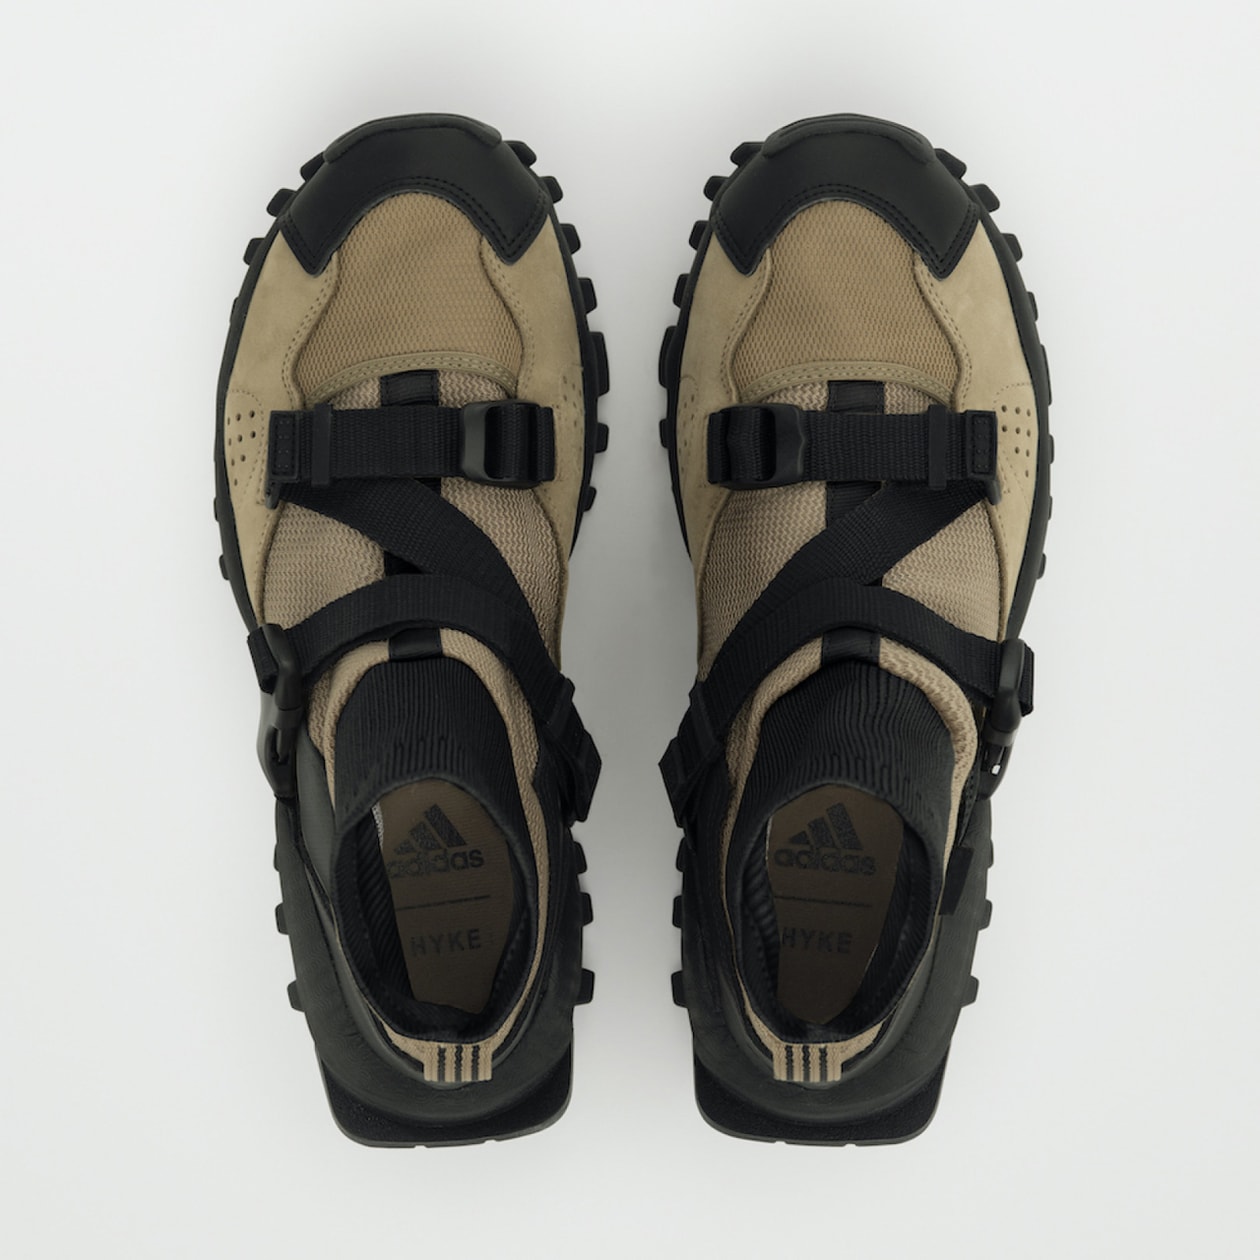  HYKE x adidas Originals Collaboration Fall/Winter 2020 Collection Sneaker FYW XTA Hiking Shoe Black Tan